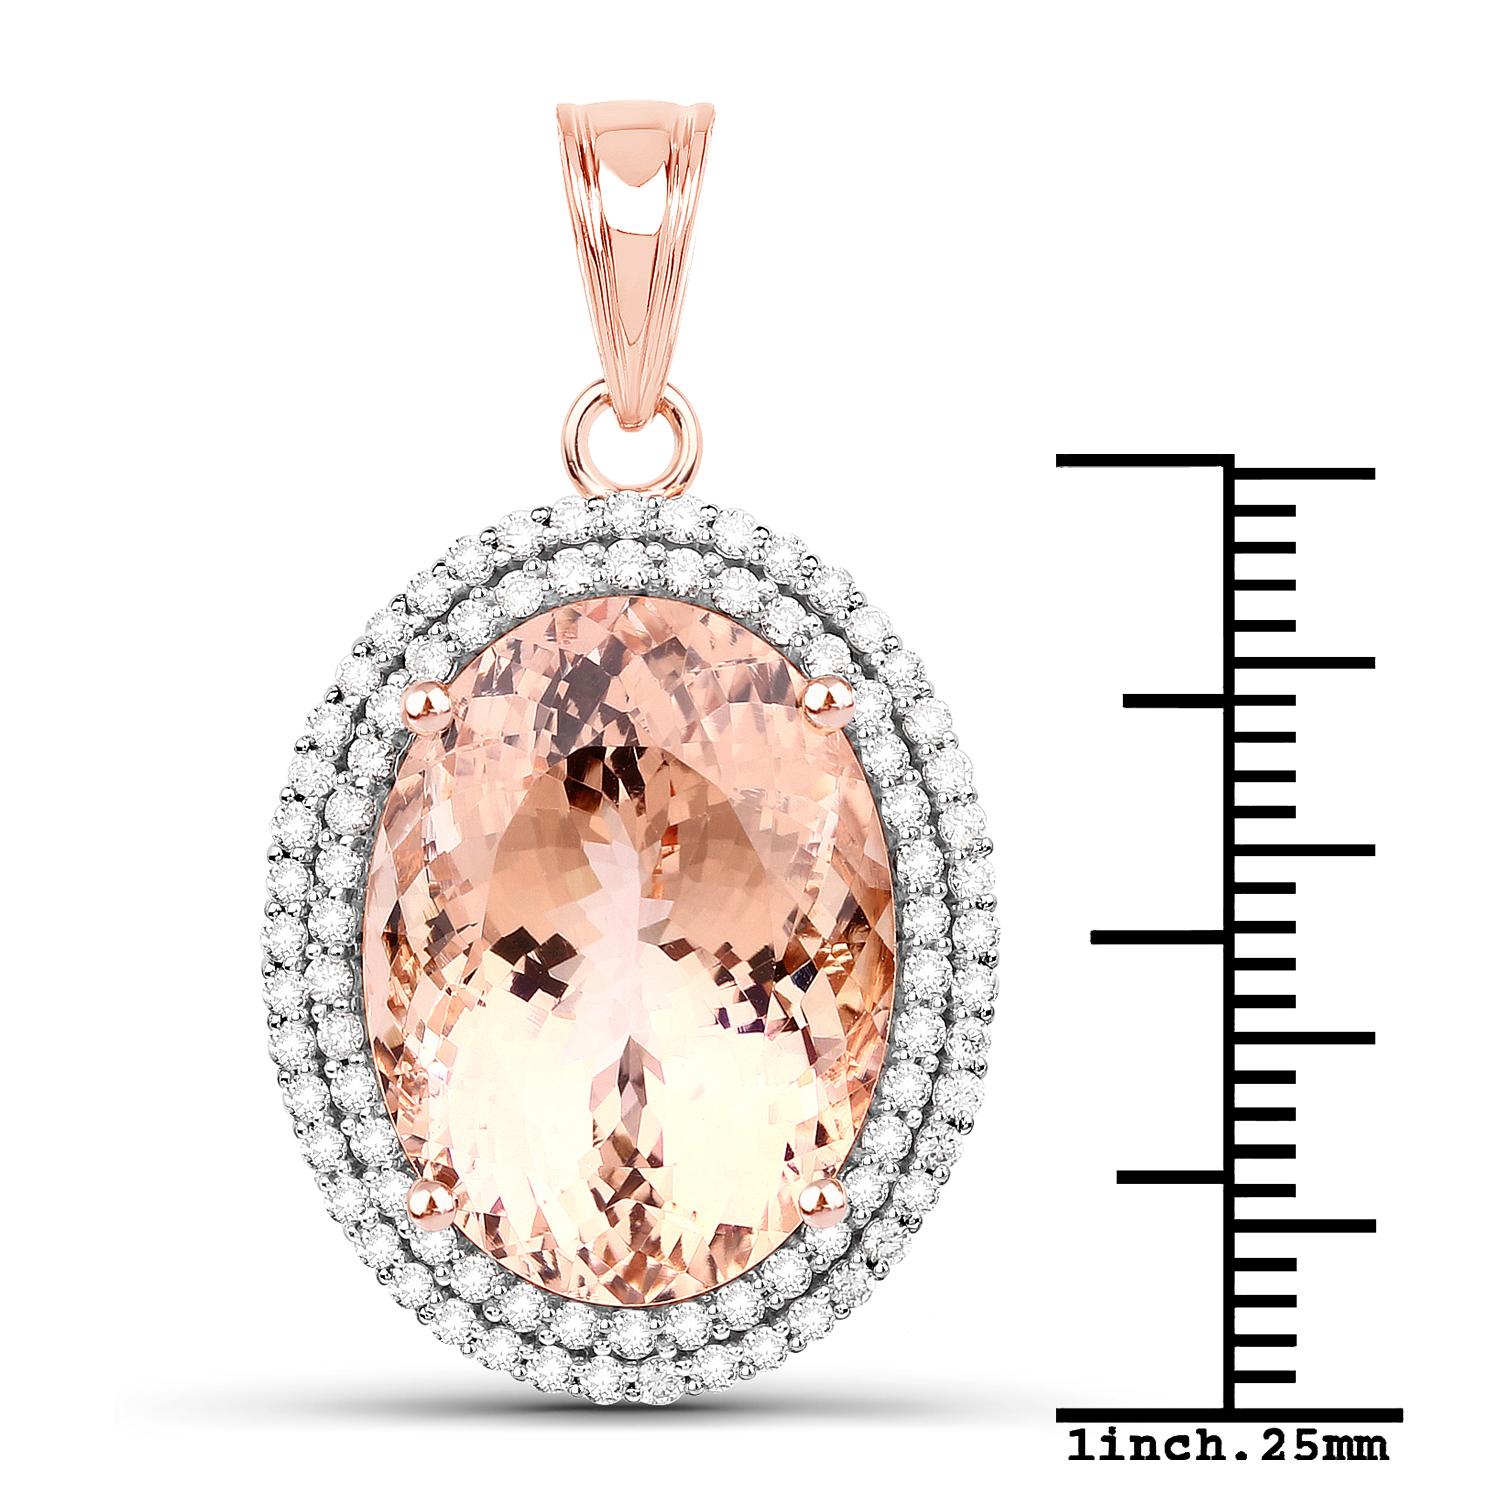 16.19 Carat Morganite Diamond 14K Rose Gold Pendant

Center Stone Details: 
Stone: Morganite
Shape: Oval cut 
Size: 19.10mm x 14.30mm
Weight: 16.19 carat

Diamond Details:
Shape: Round Brilliant (83)
Total Carat Weight: 0.83 carat 
Quality: SI1-SI2,